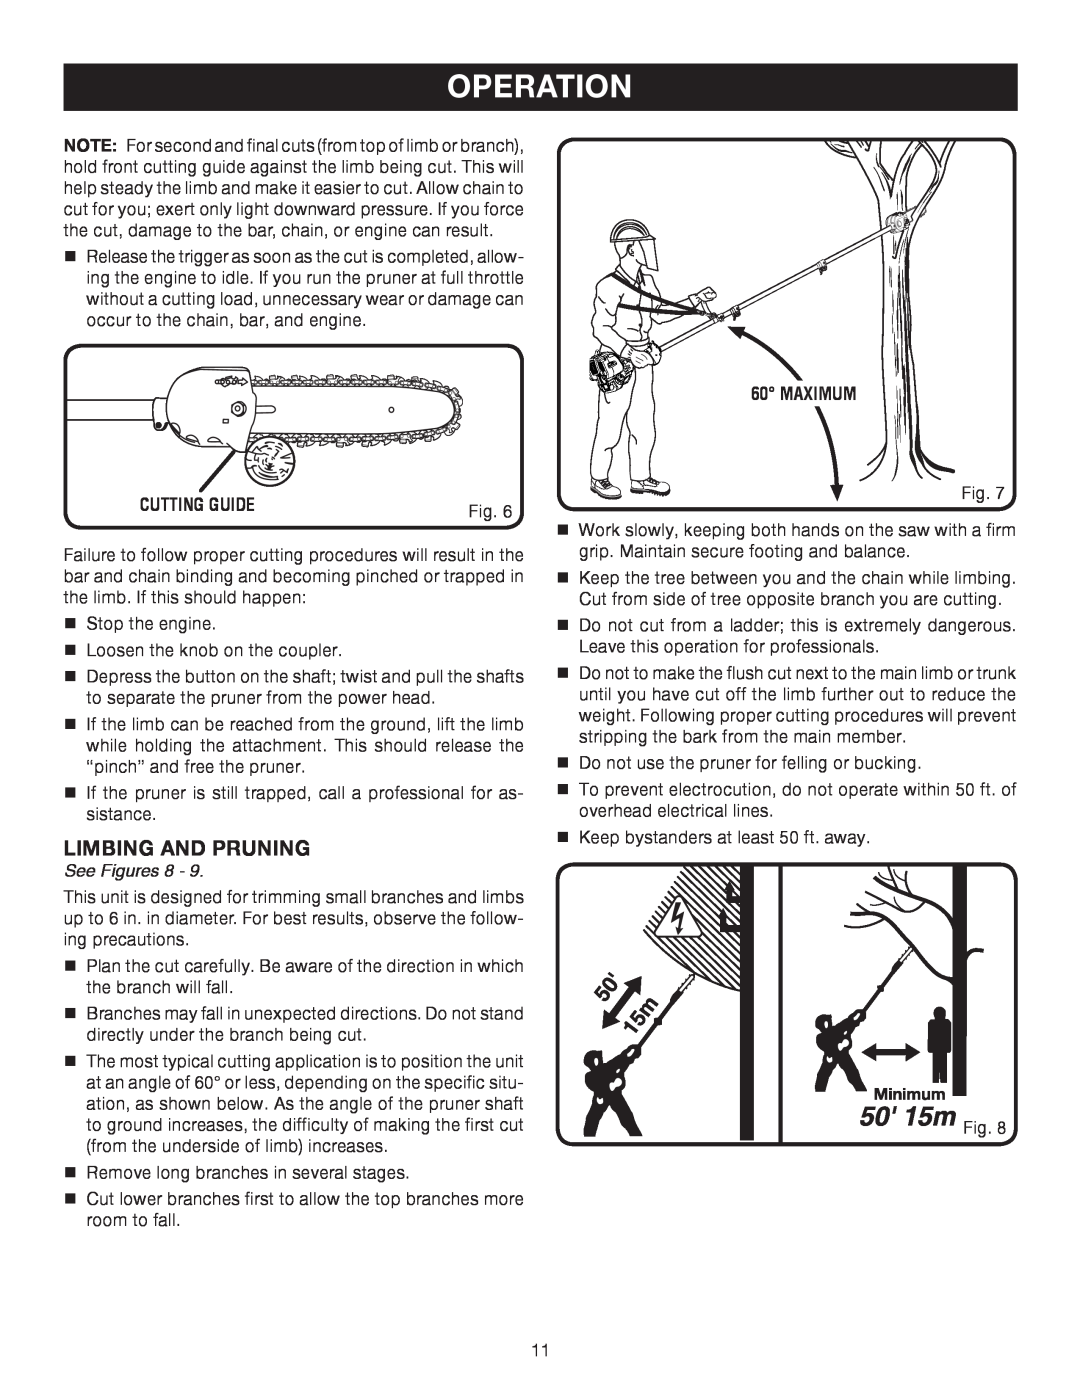 Ryobi RY52014 manual Limbing And Pruning, Operation, Cutting Guide, See Figures, Maximum 